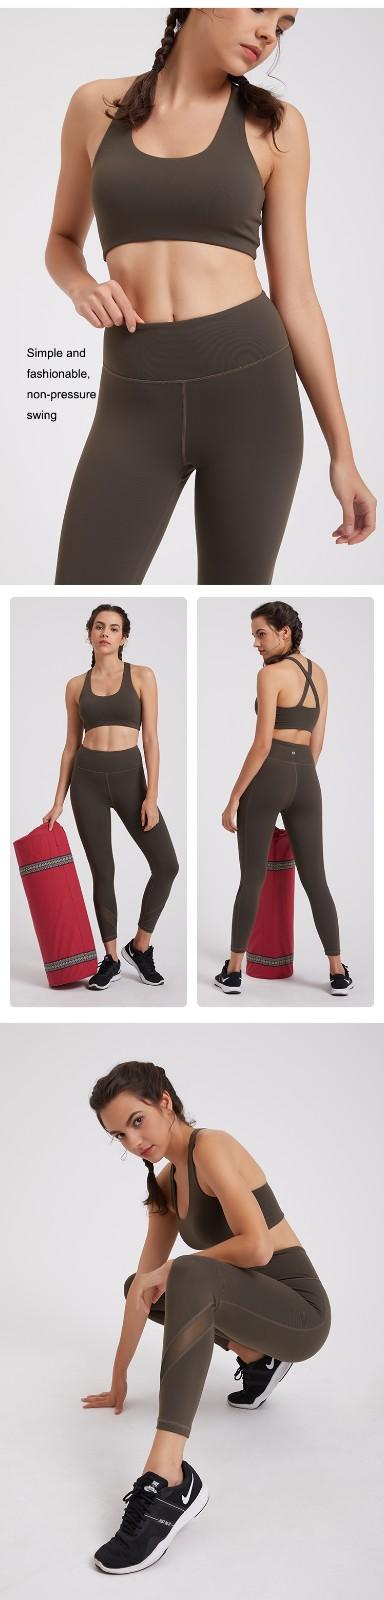 fashion yoga shorts outfit bulk production for gym